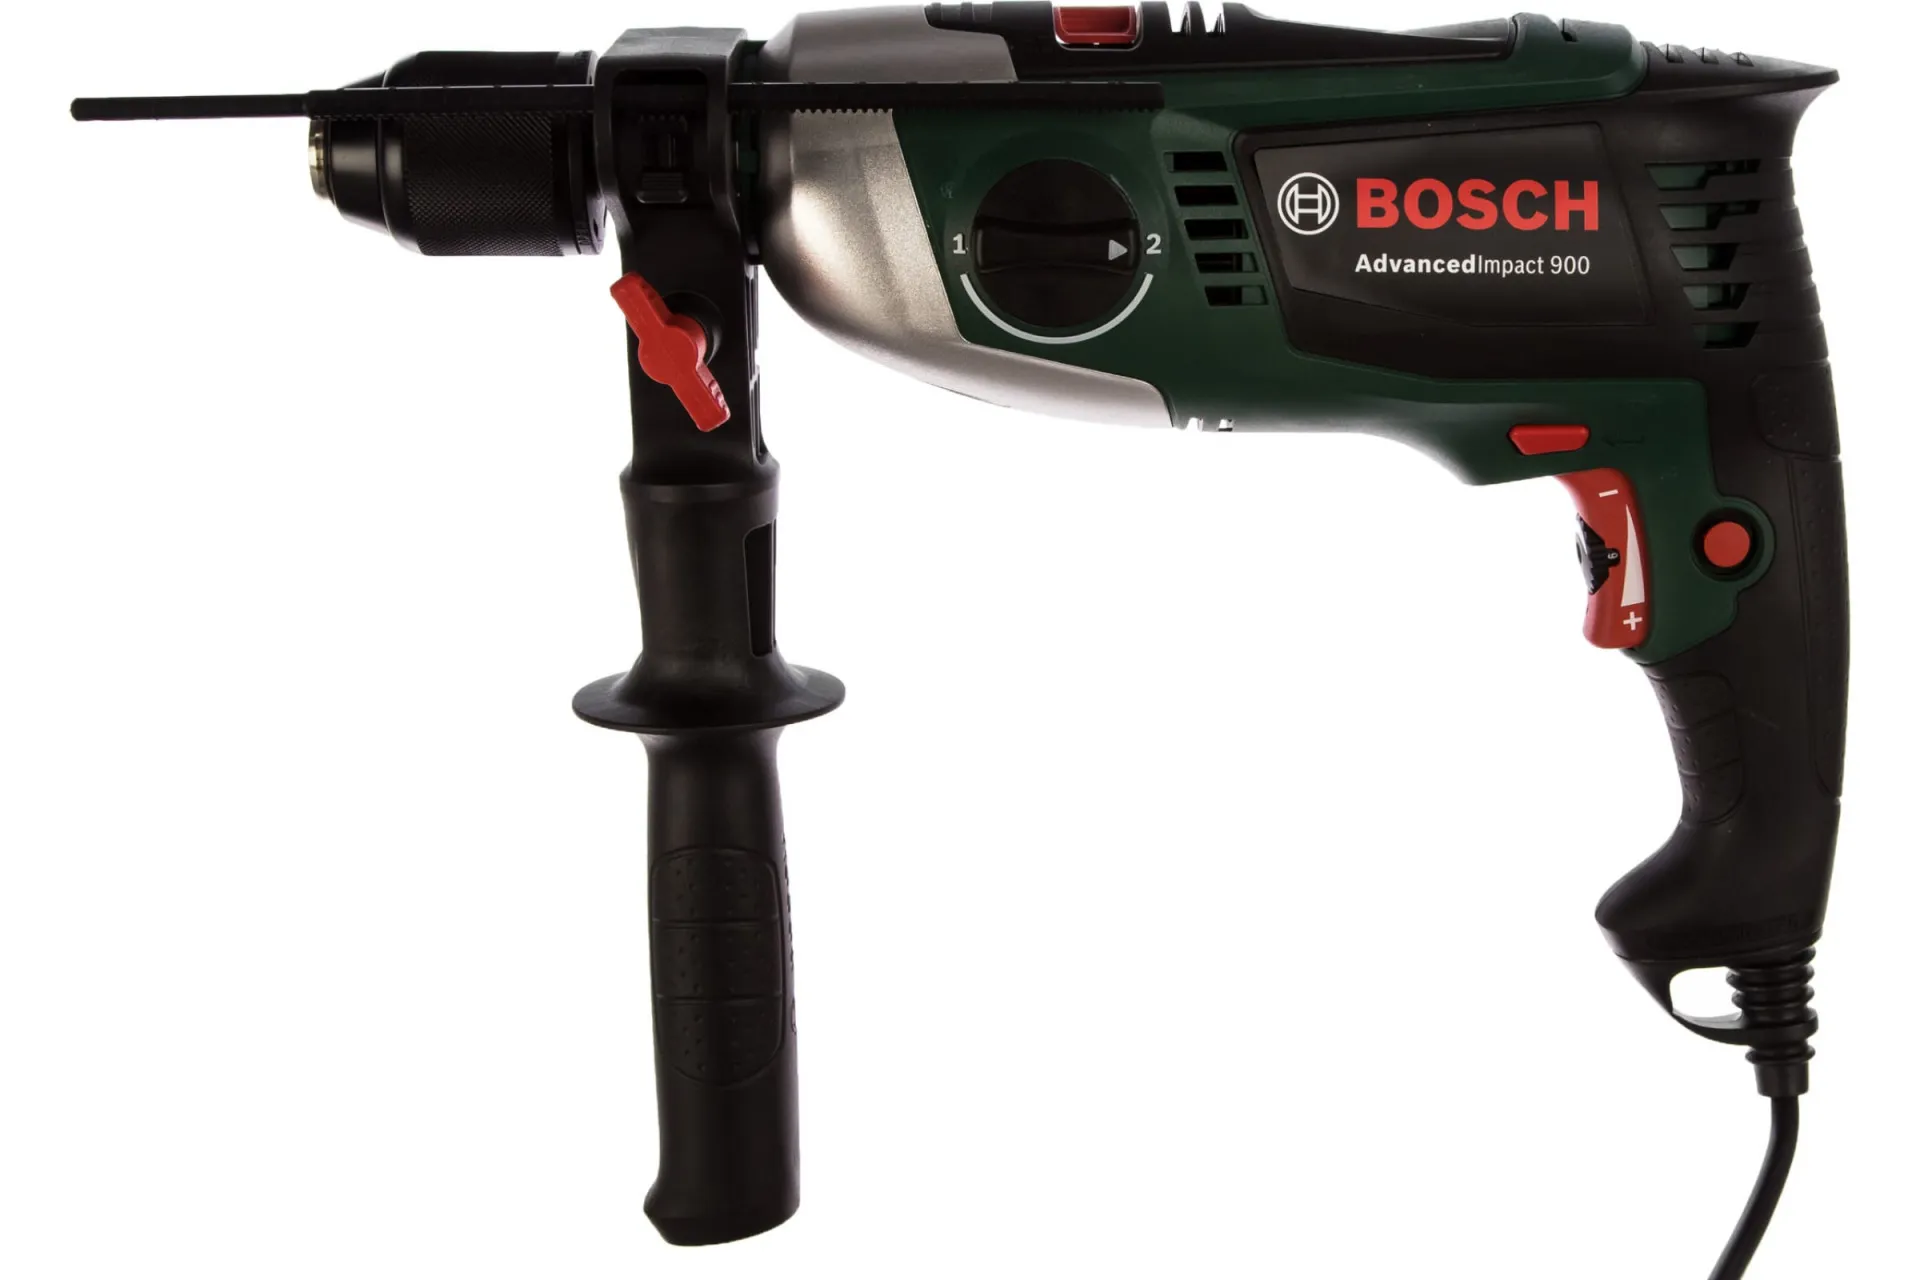 Ударная дрель Bosch AdvancedImpact 900#2